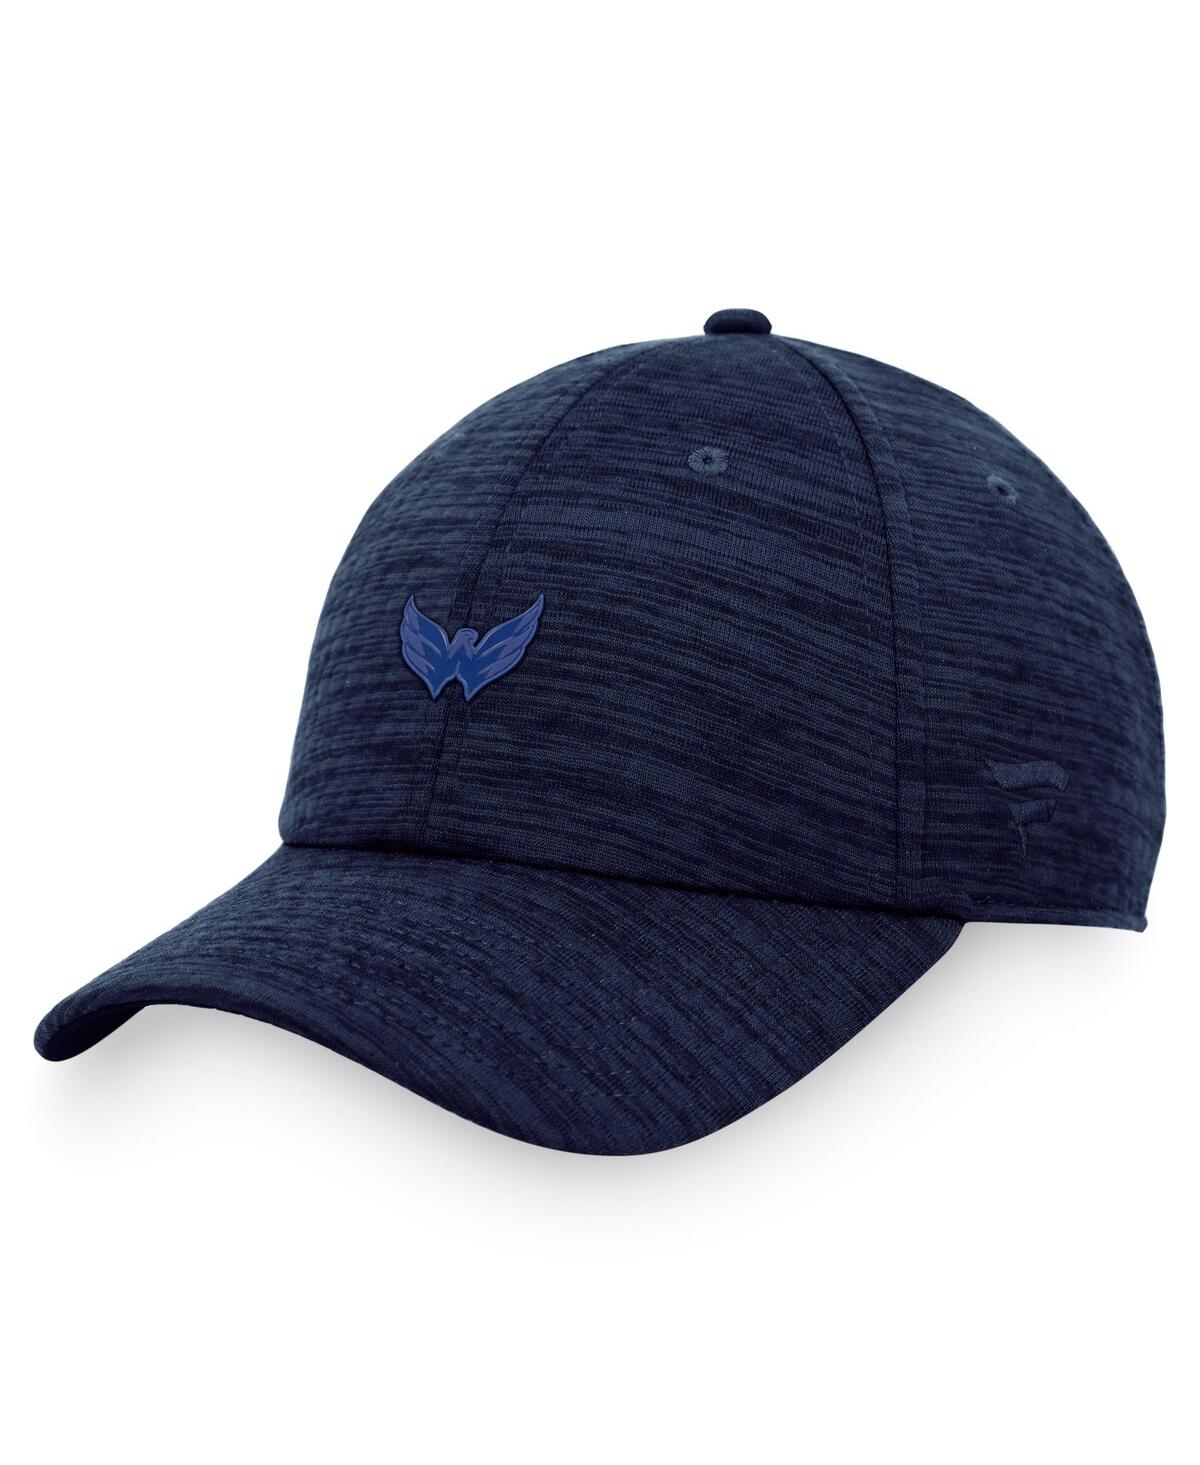 Shop Fanatics Men's  Navy Washington Capitals Authentic Pro Road Snapback Hat